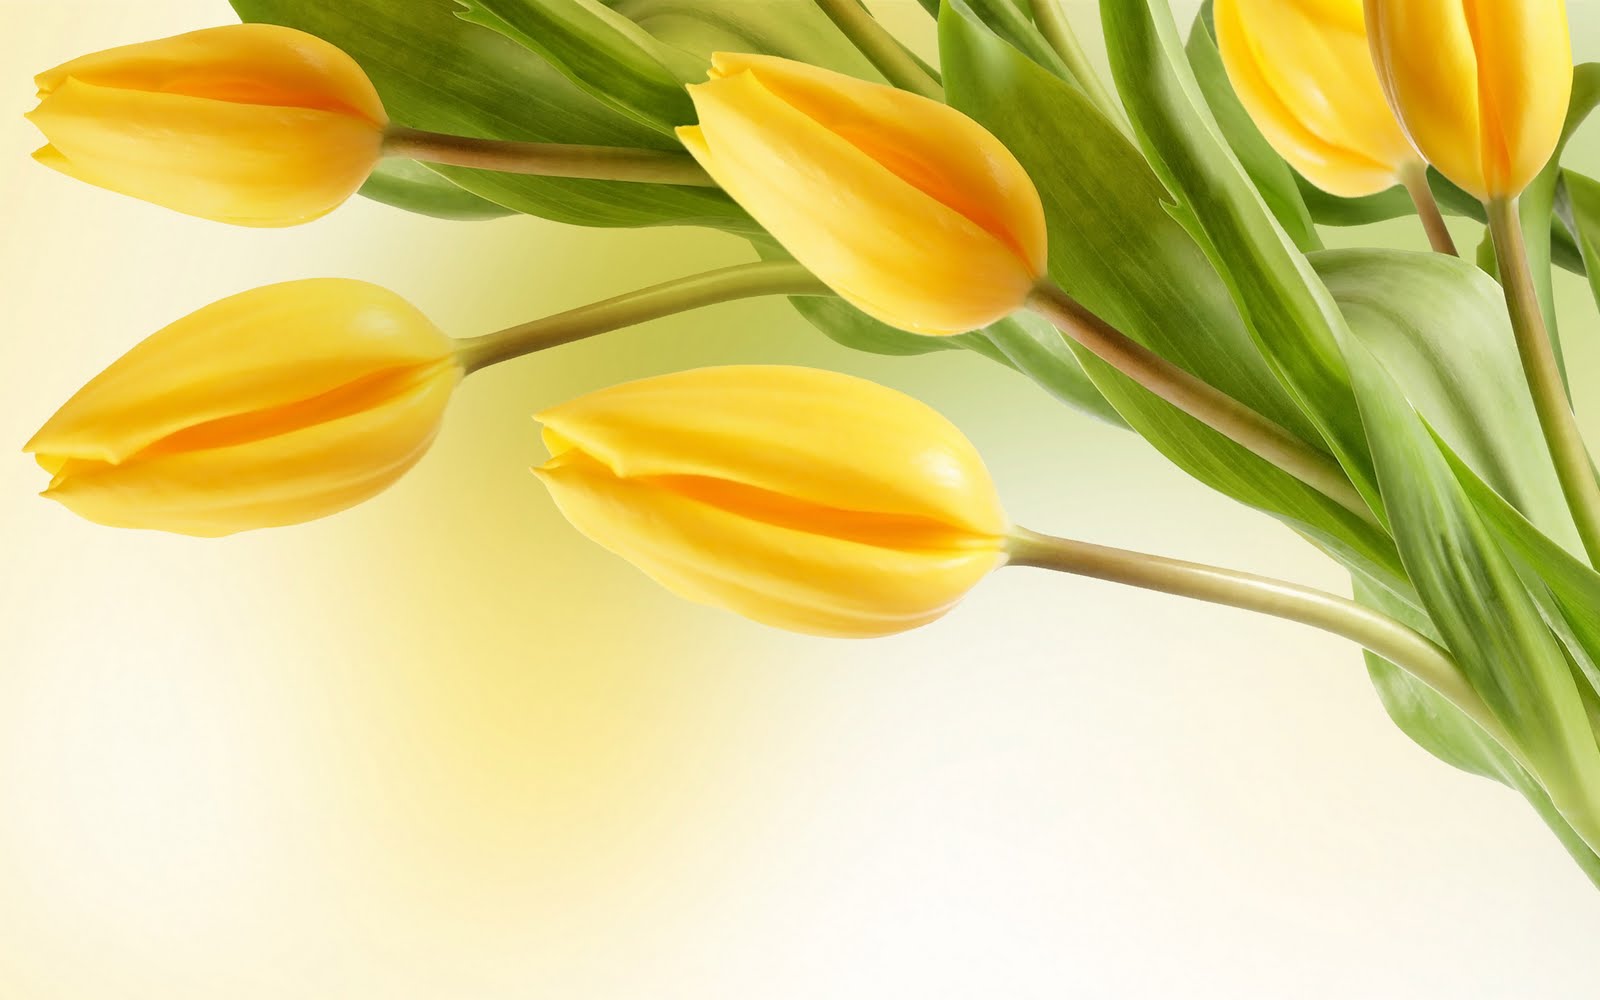 https://blogger.googleusercontent.com/img/b/R29vZ2xl/AVvXsEh9K8gQBaM7zMDlt90S5PfjQbJfEd8FYyiQimss86jdJ0letnW3PgusQq7LmaoD3ATd7Dg495drD0ImWbWexBSDkrQFE2c3eR0qLOj7ai7YGVMh5__O4YXlVaeSnd1MvlxPoY5-If9hvpQ/s1600/Tulip+flowers+wallpaper-3.jpg